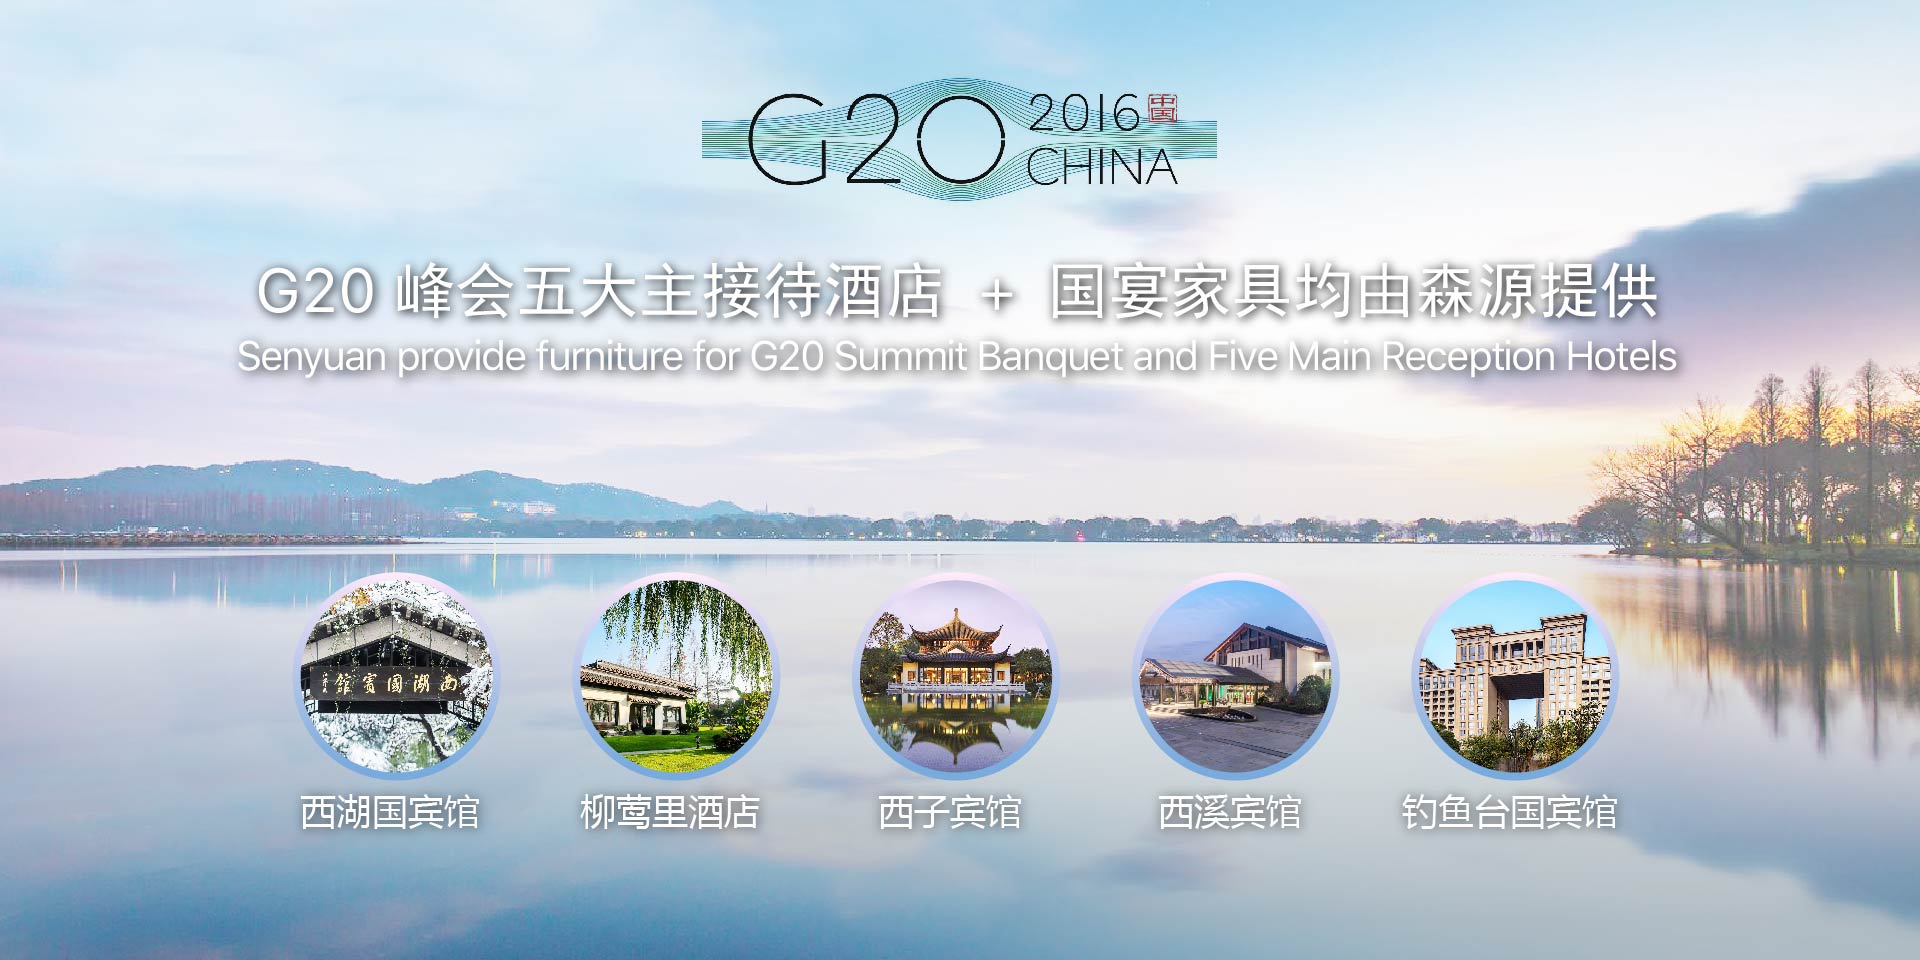 G20峰會(huì)五大主接待酒店+國(guó)宴家具均由森源提供